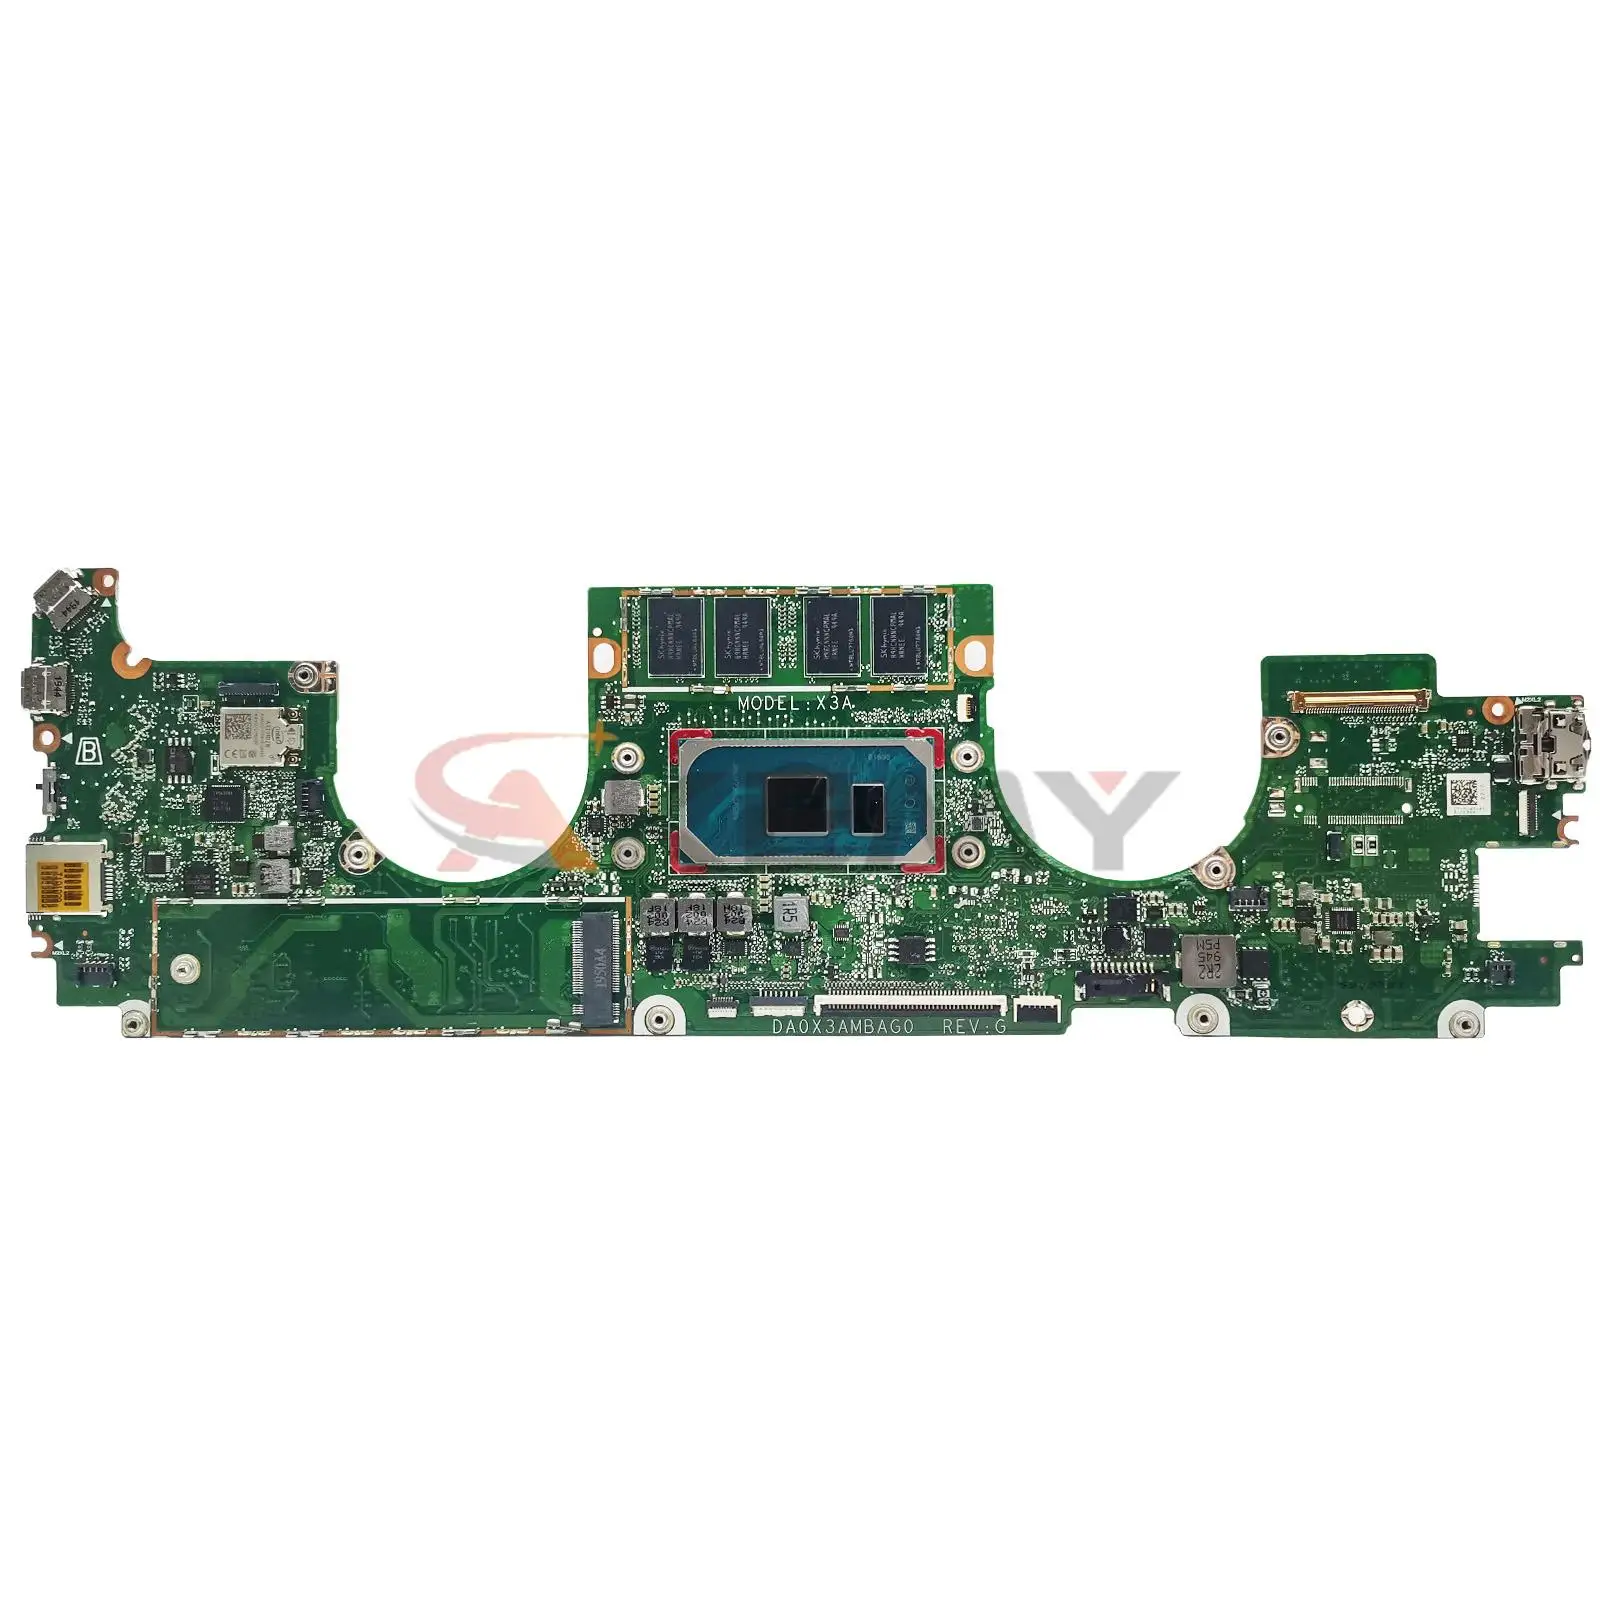 DA0X3AMBAG0 Mainboard For HP Spectre X360 13-AW 13-AW0013DX Laptop Motherboard w/ I5-1035G4 I7-1065G7 8G 16G RAM L71989-001 UMA